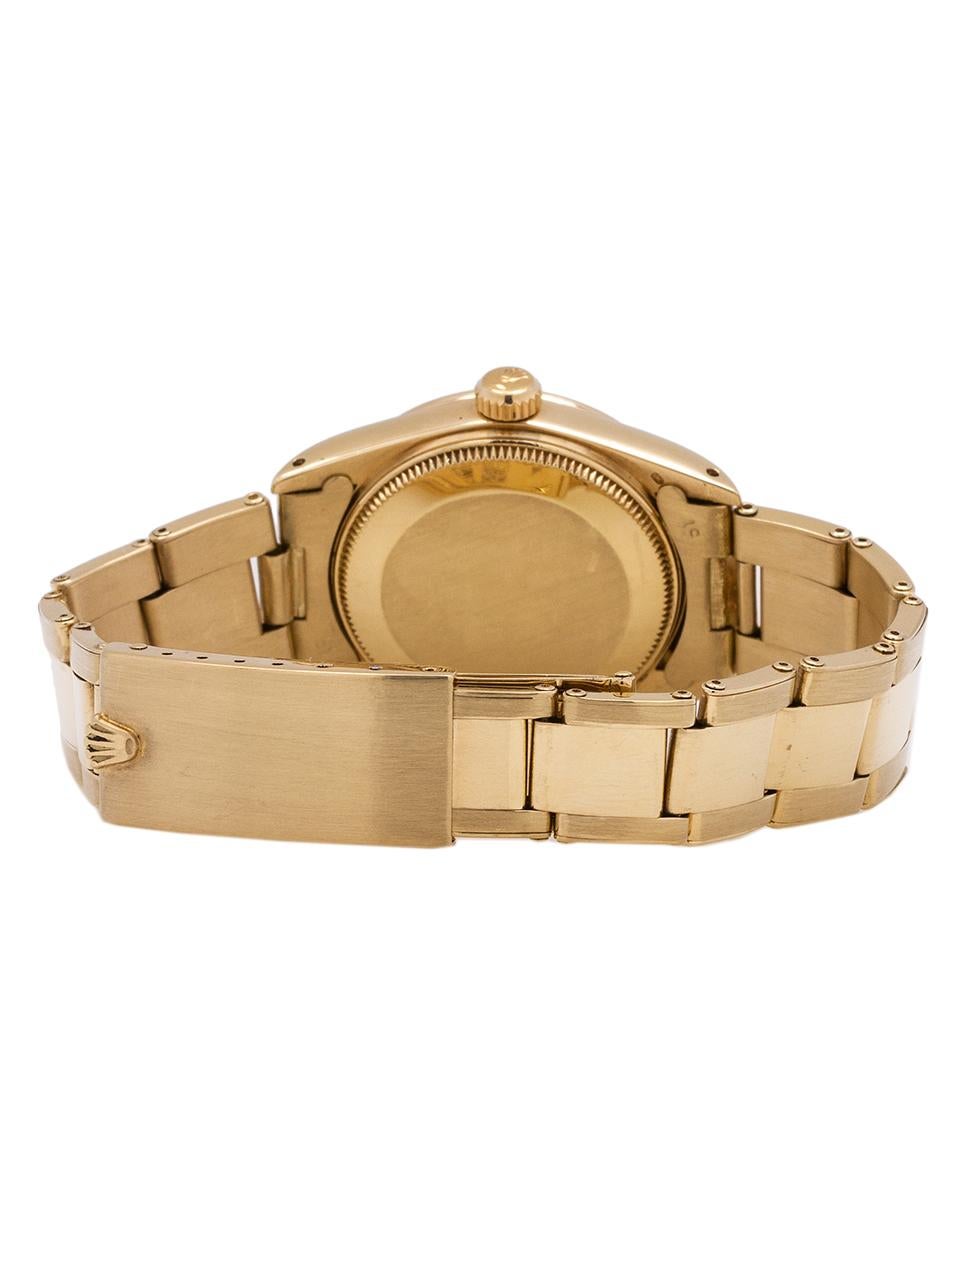 Women's or Men's Rolex yellow gold Midsize Datejust wristwatch Ref 6827, circa 1981